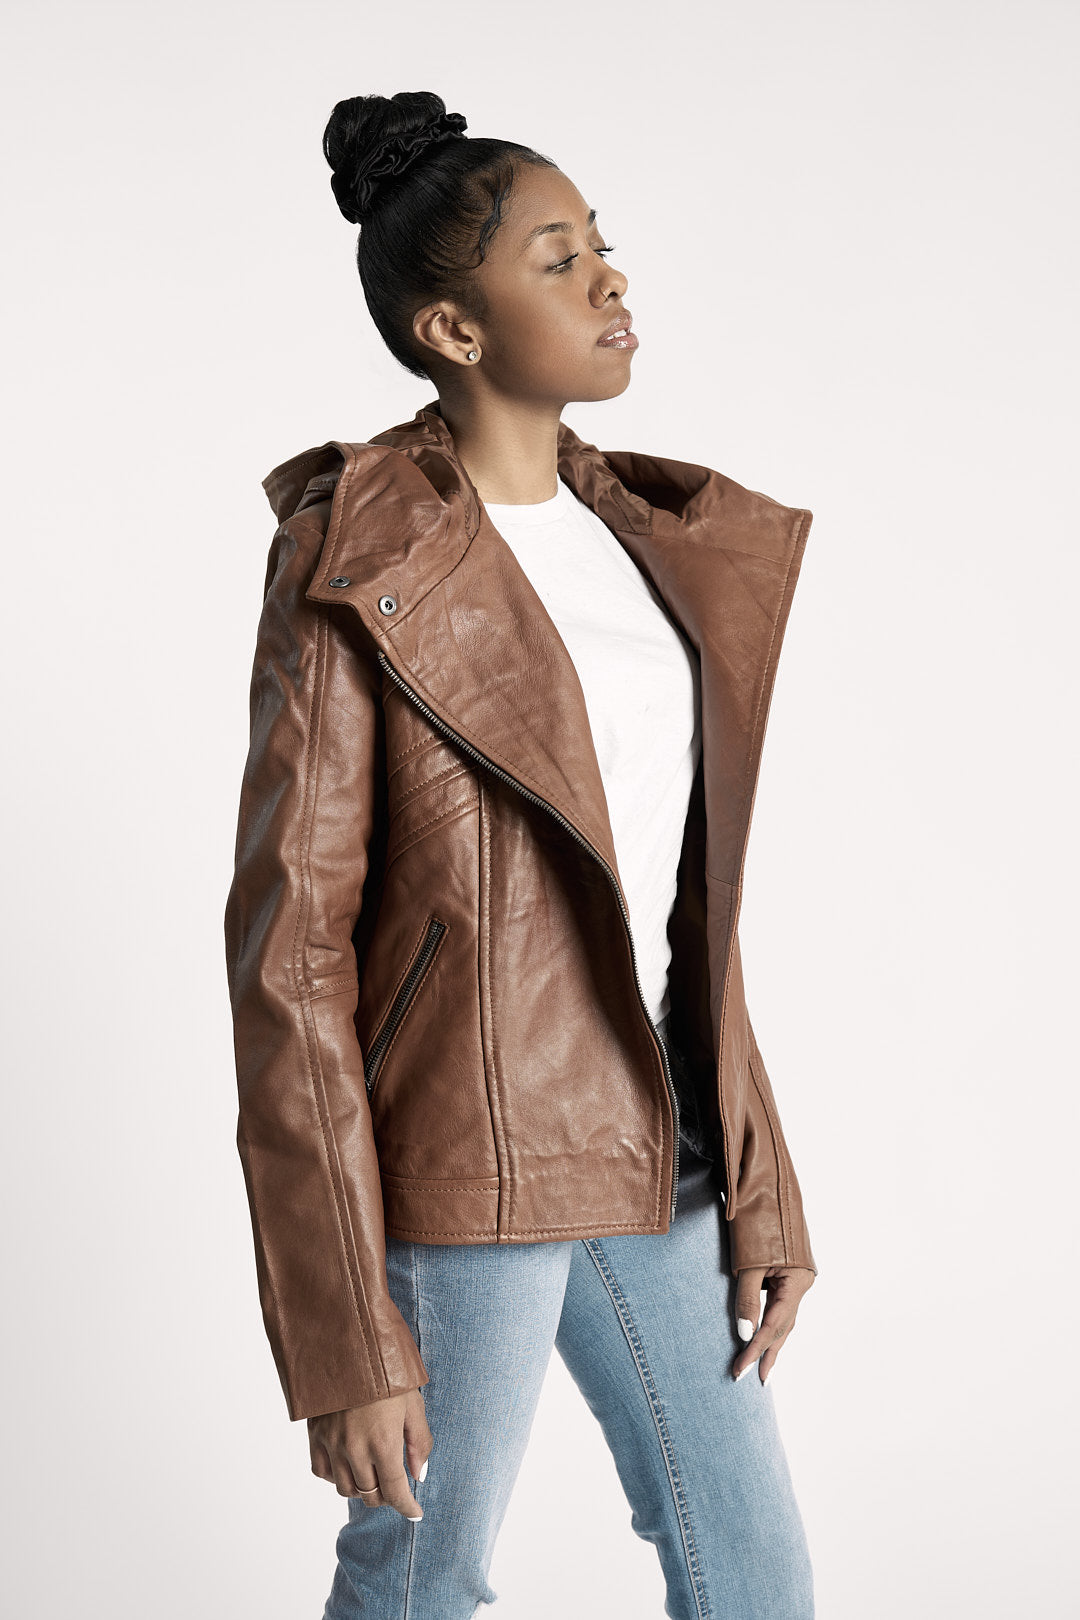 Sassy High Fashion Womens Hooded Leather Jacket